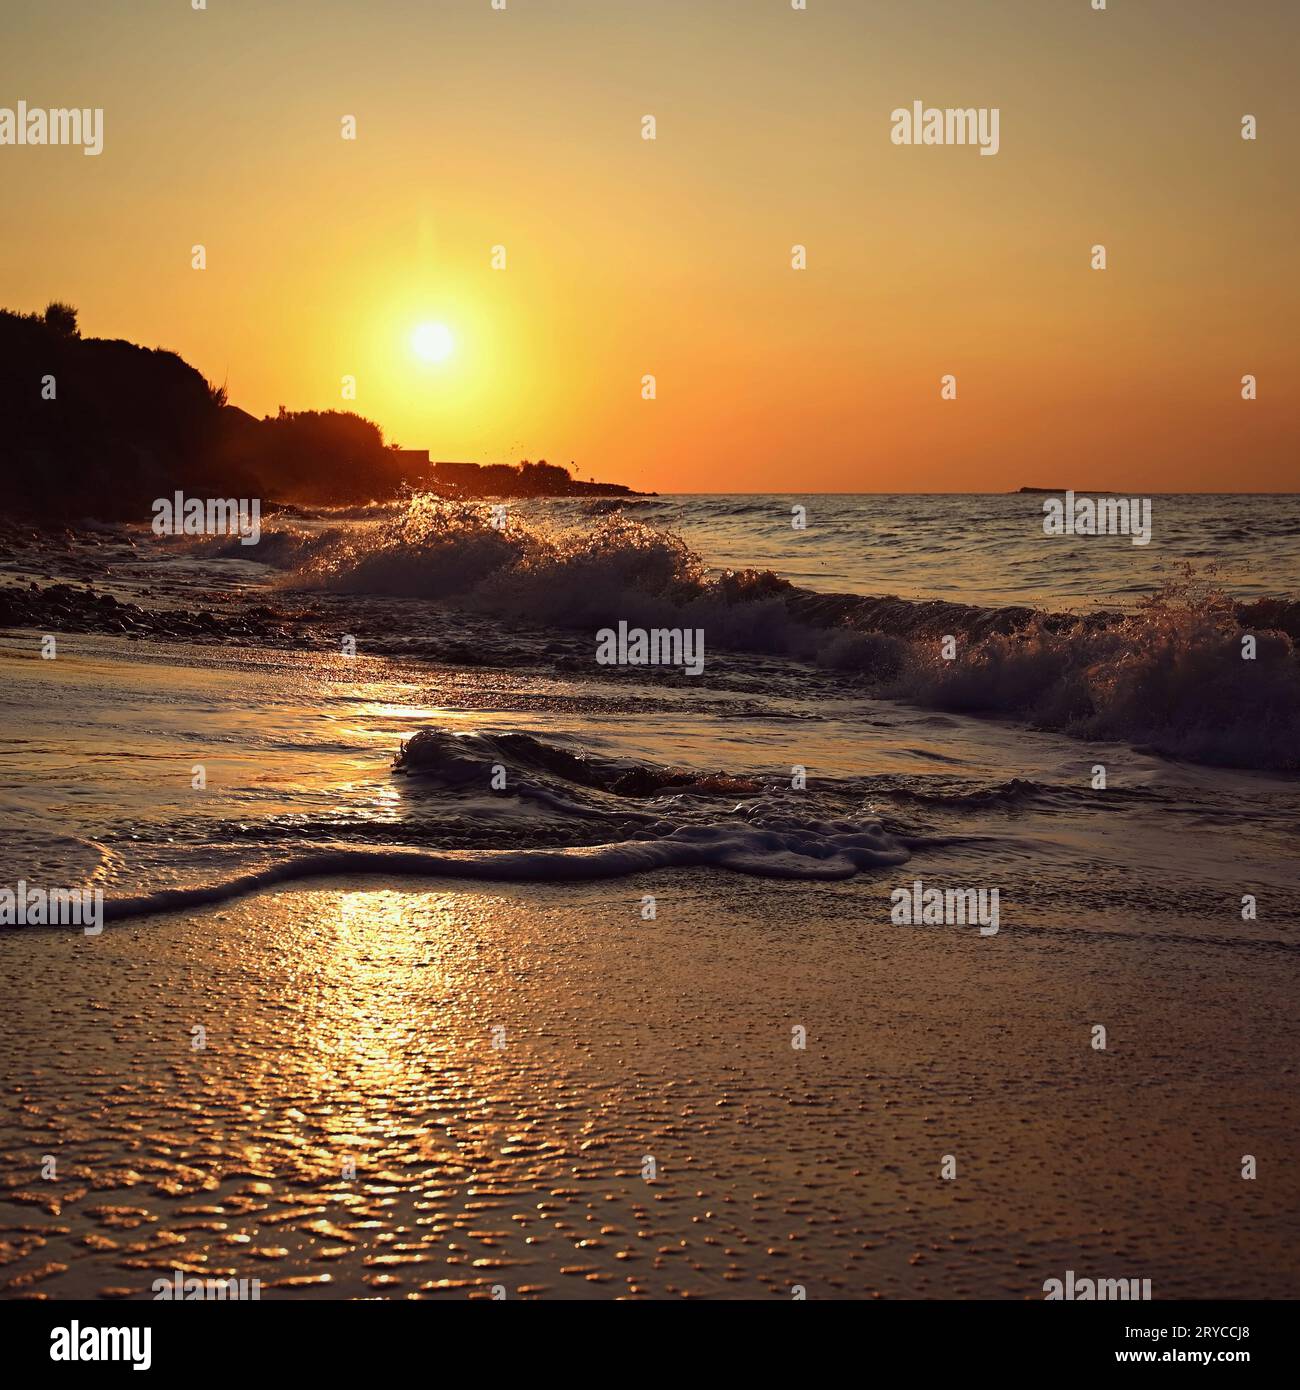 Beautiful sunset on the beach with the sea. Waves on the sea. Greece - Corfu island (Kerkyra) Agios Georgios. A concept for travel, holidays and summe Stock Photo